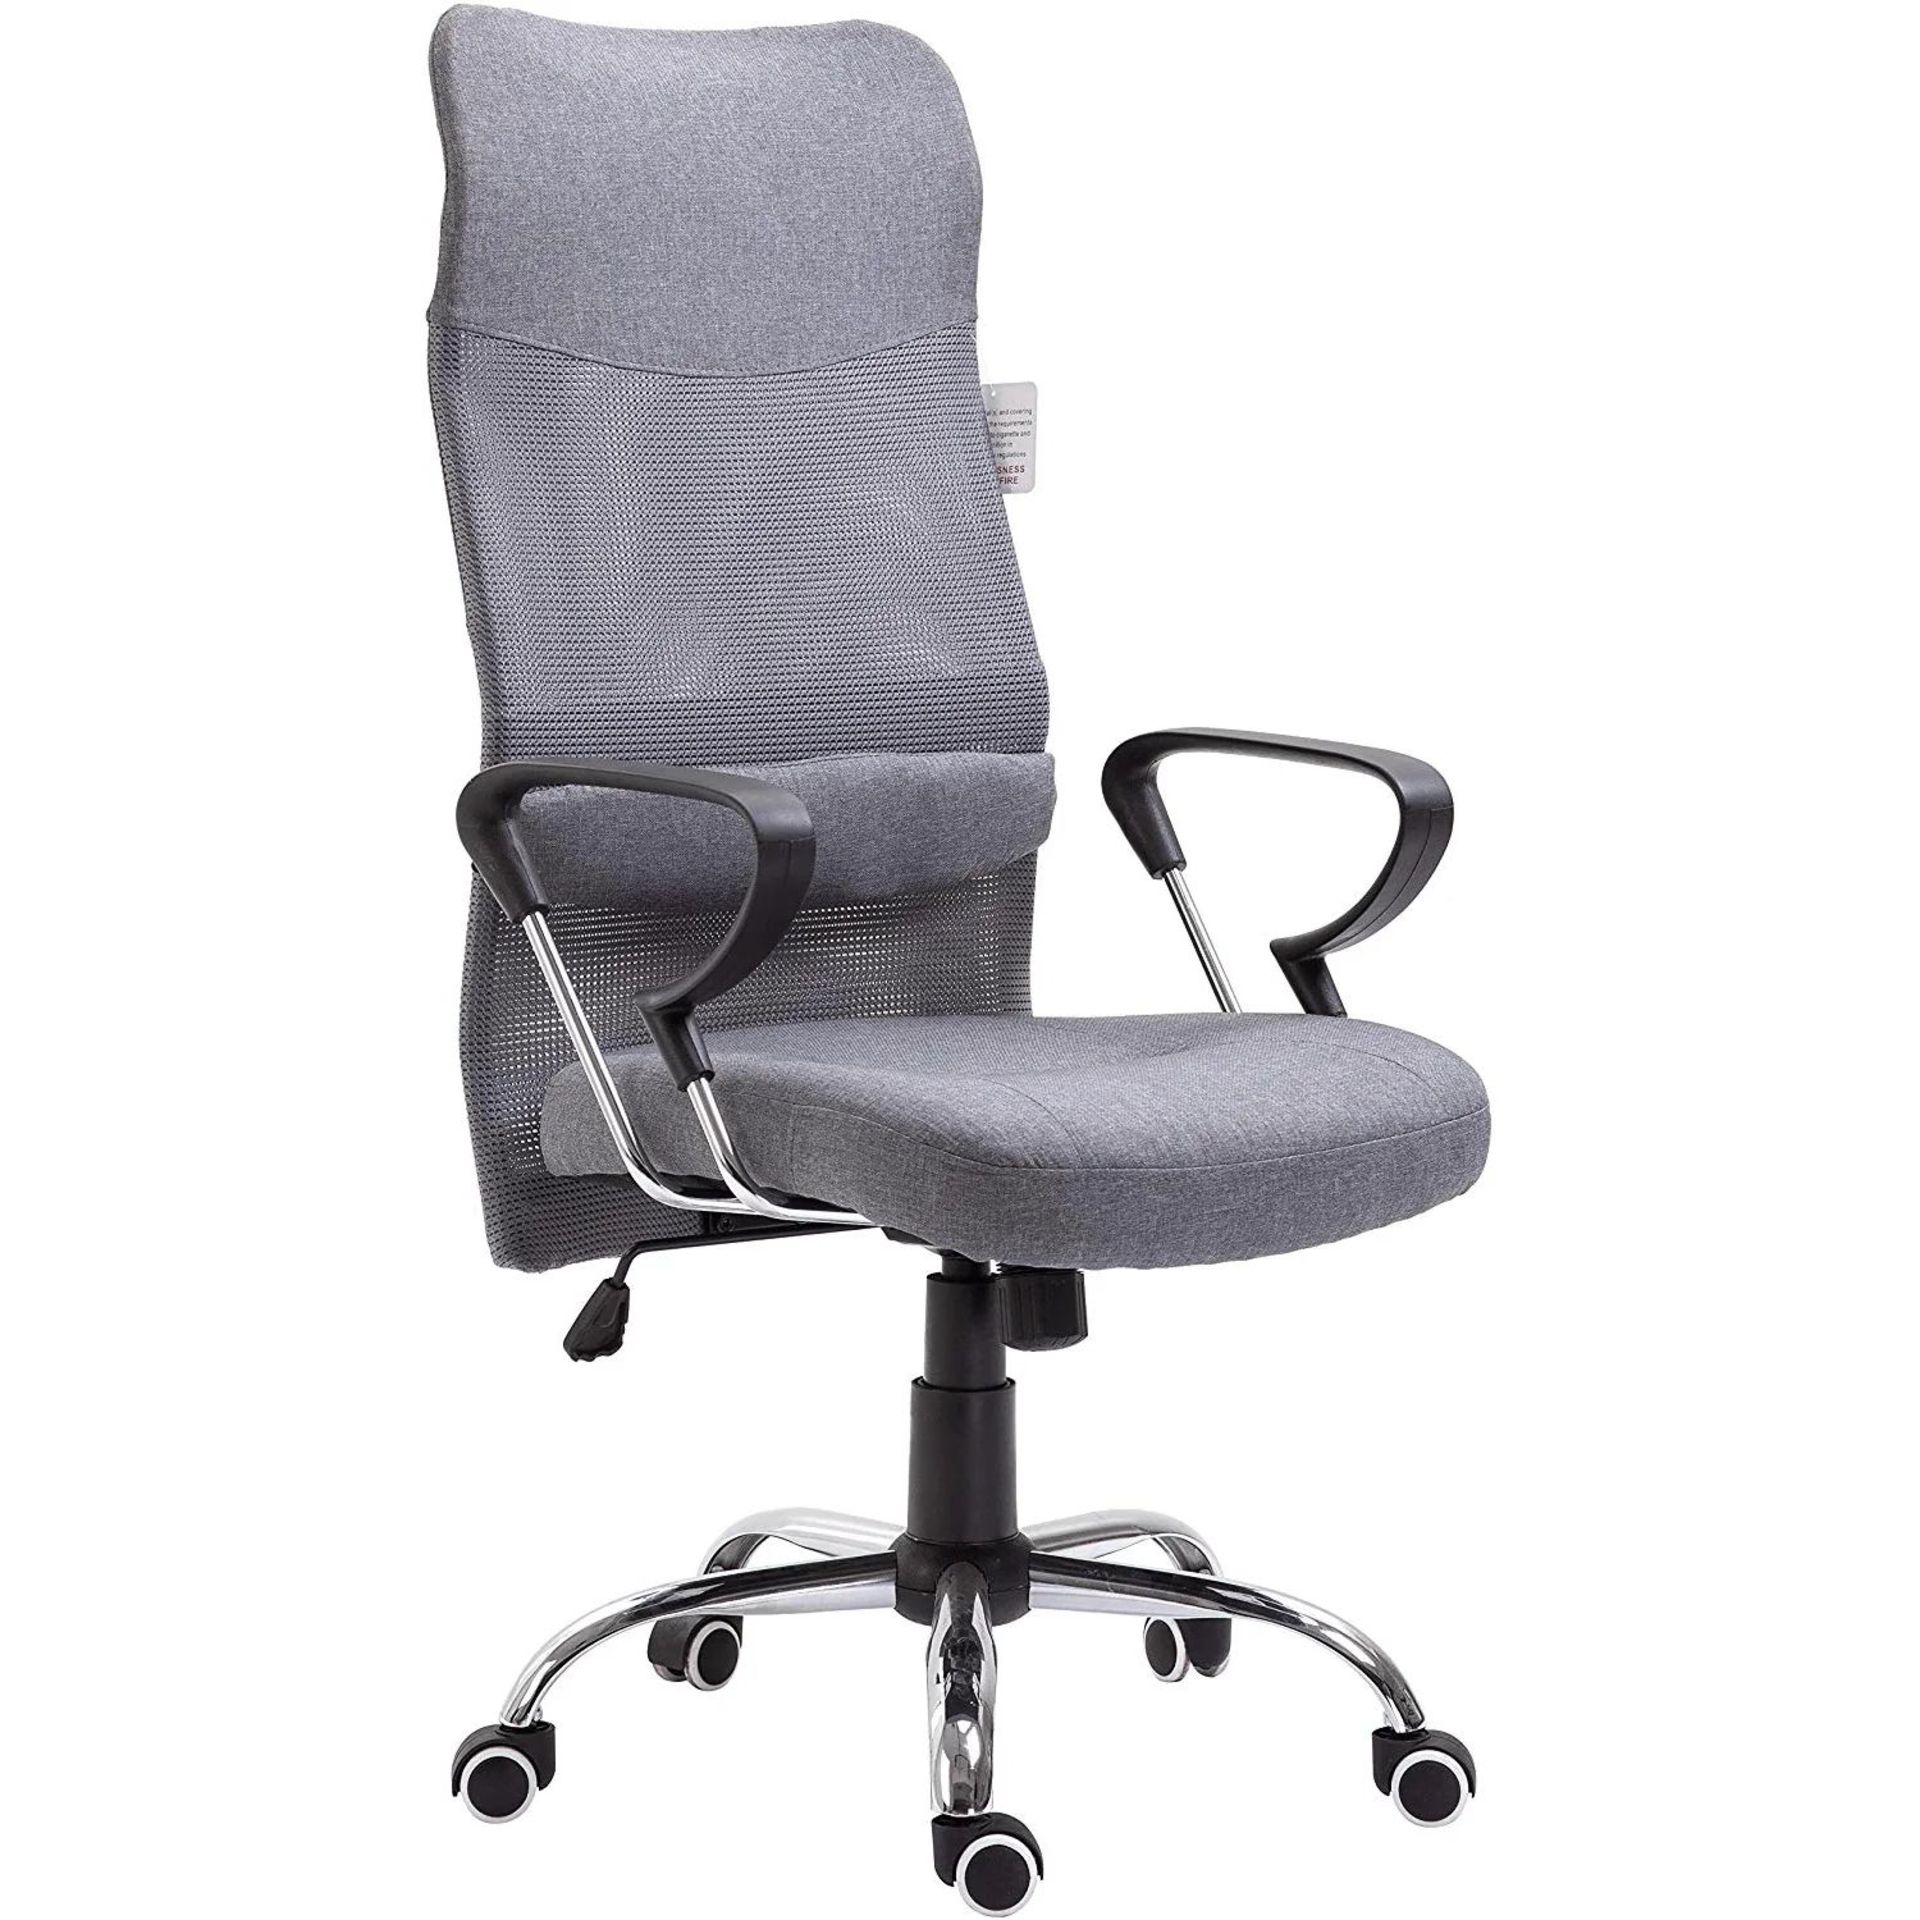 High Back Mesh Fabric Swivel Office Chair, MO57 Grey. - R13.13. - Bild 2 aus 2